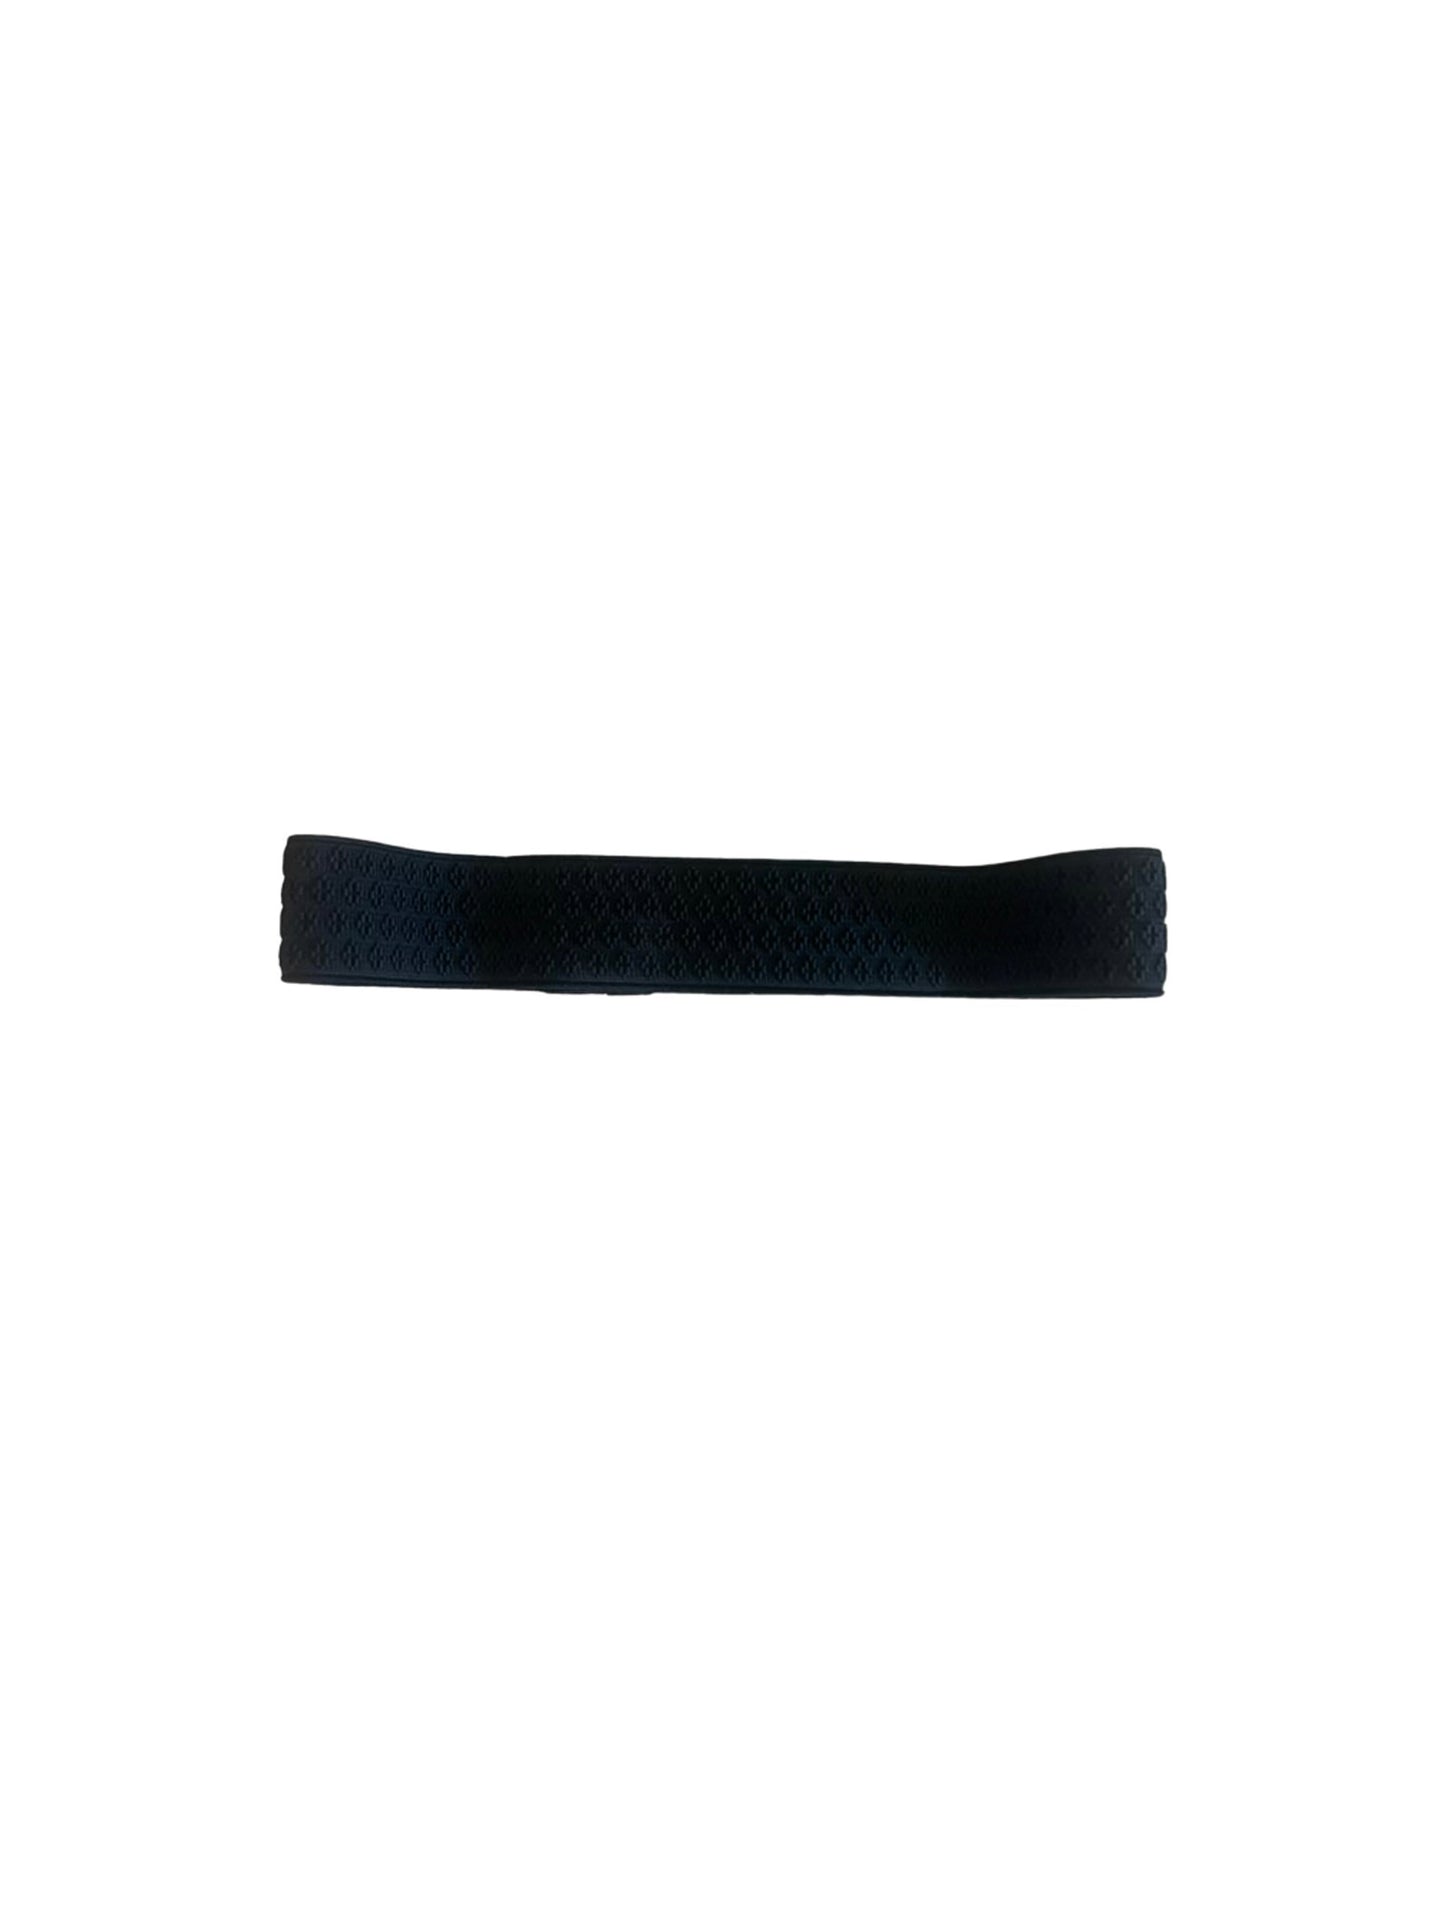 elastic hat band 1.5 inch patterned black